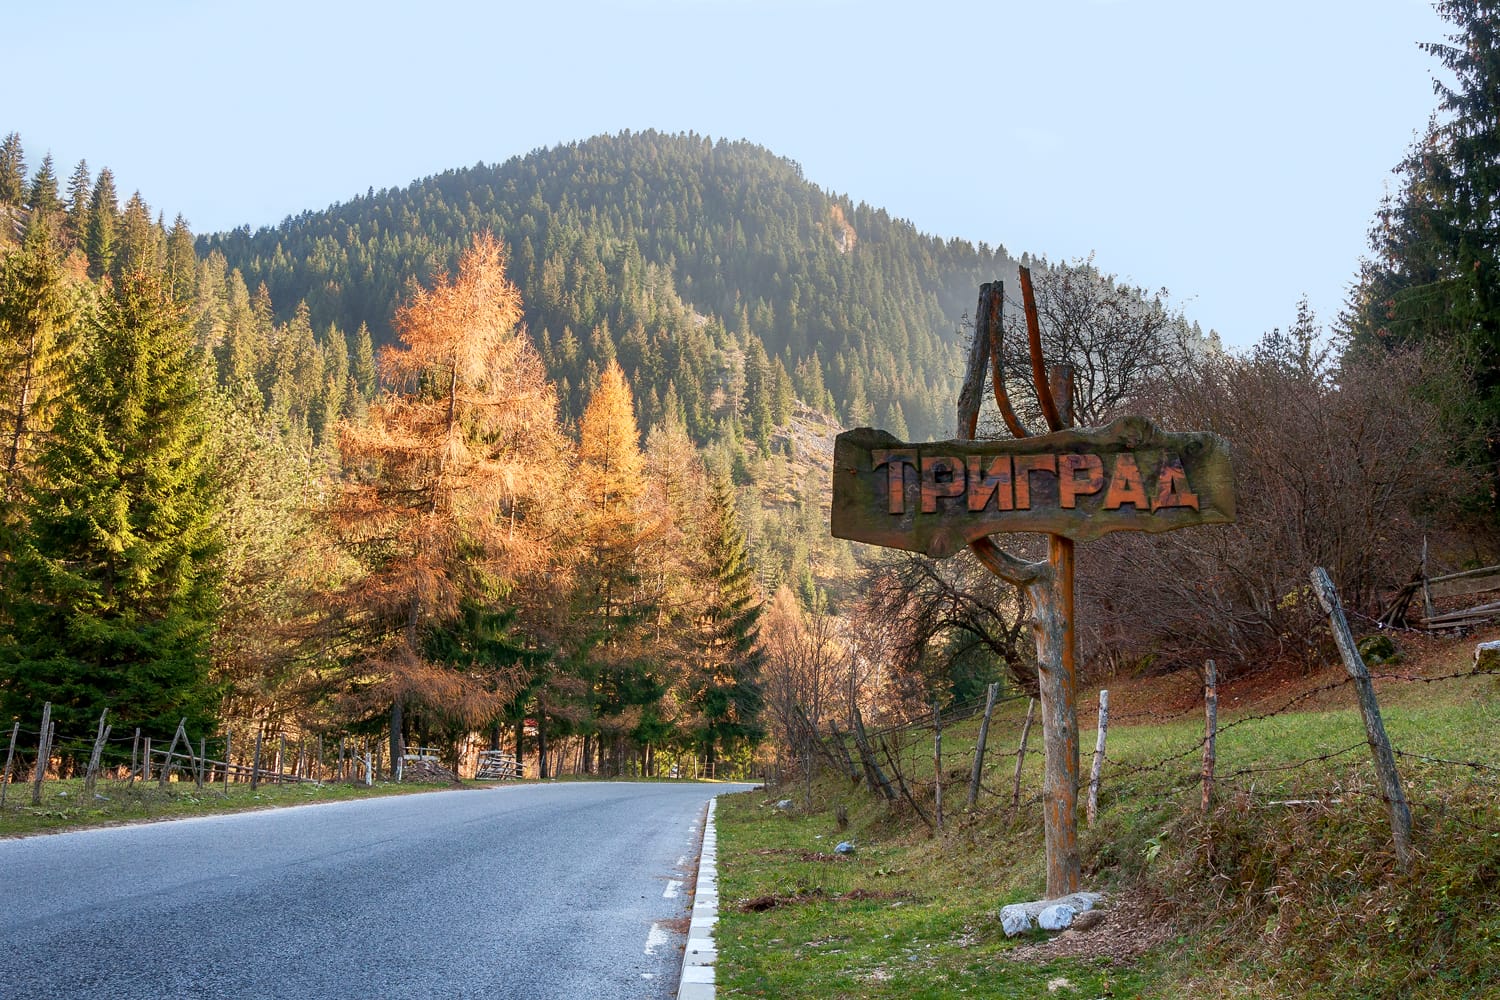 The sign of village of Trigrad - popular tourist destination in Rhodope mountains, Bulgaria